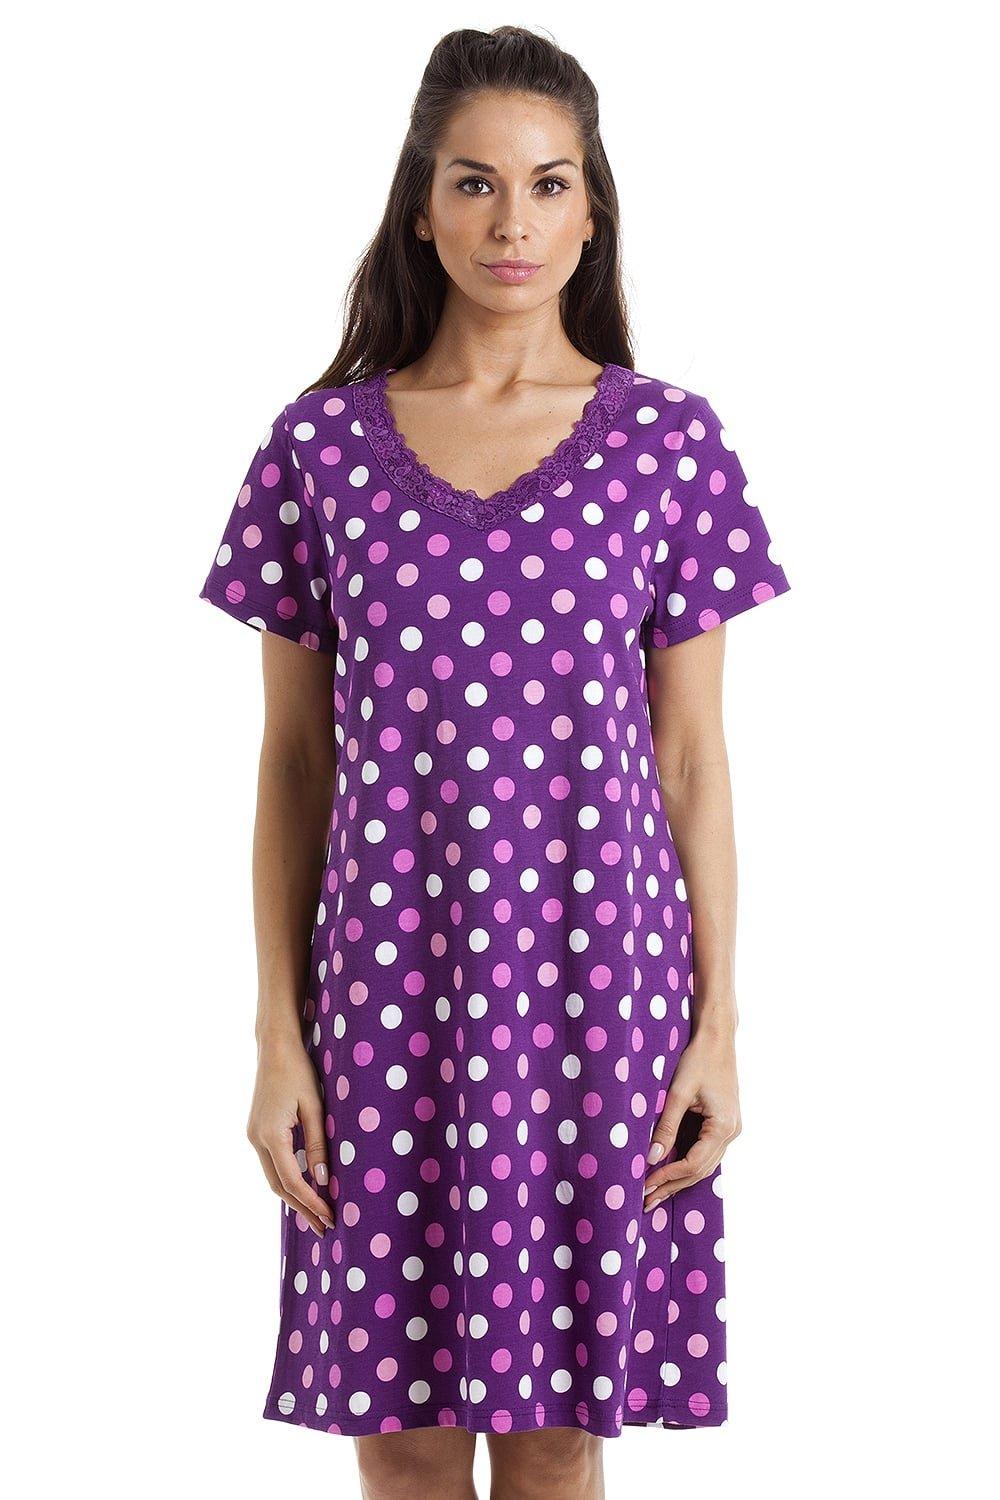 Polka Dot Print Cotton Summer Nightshirt